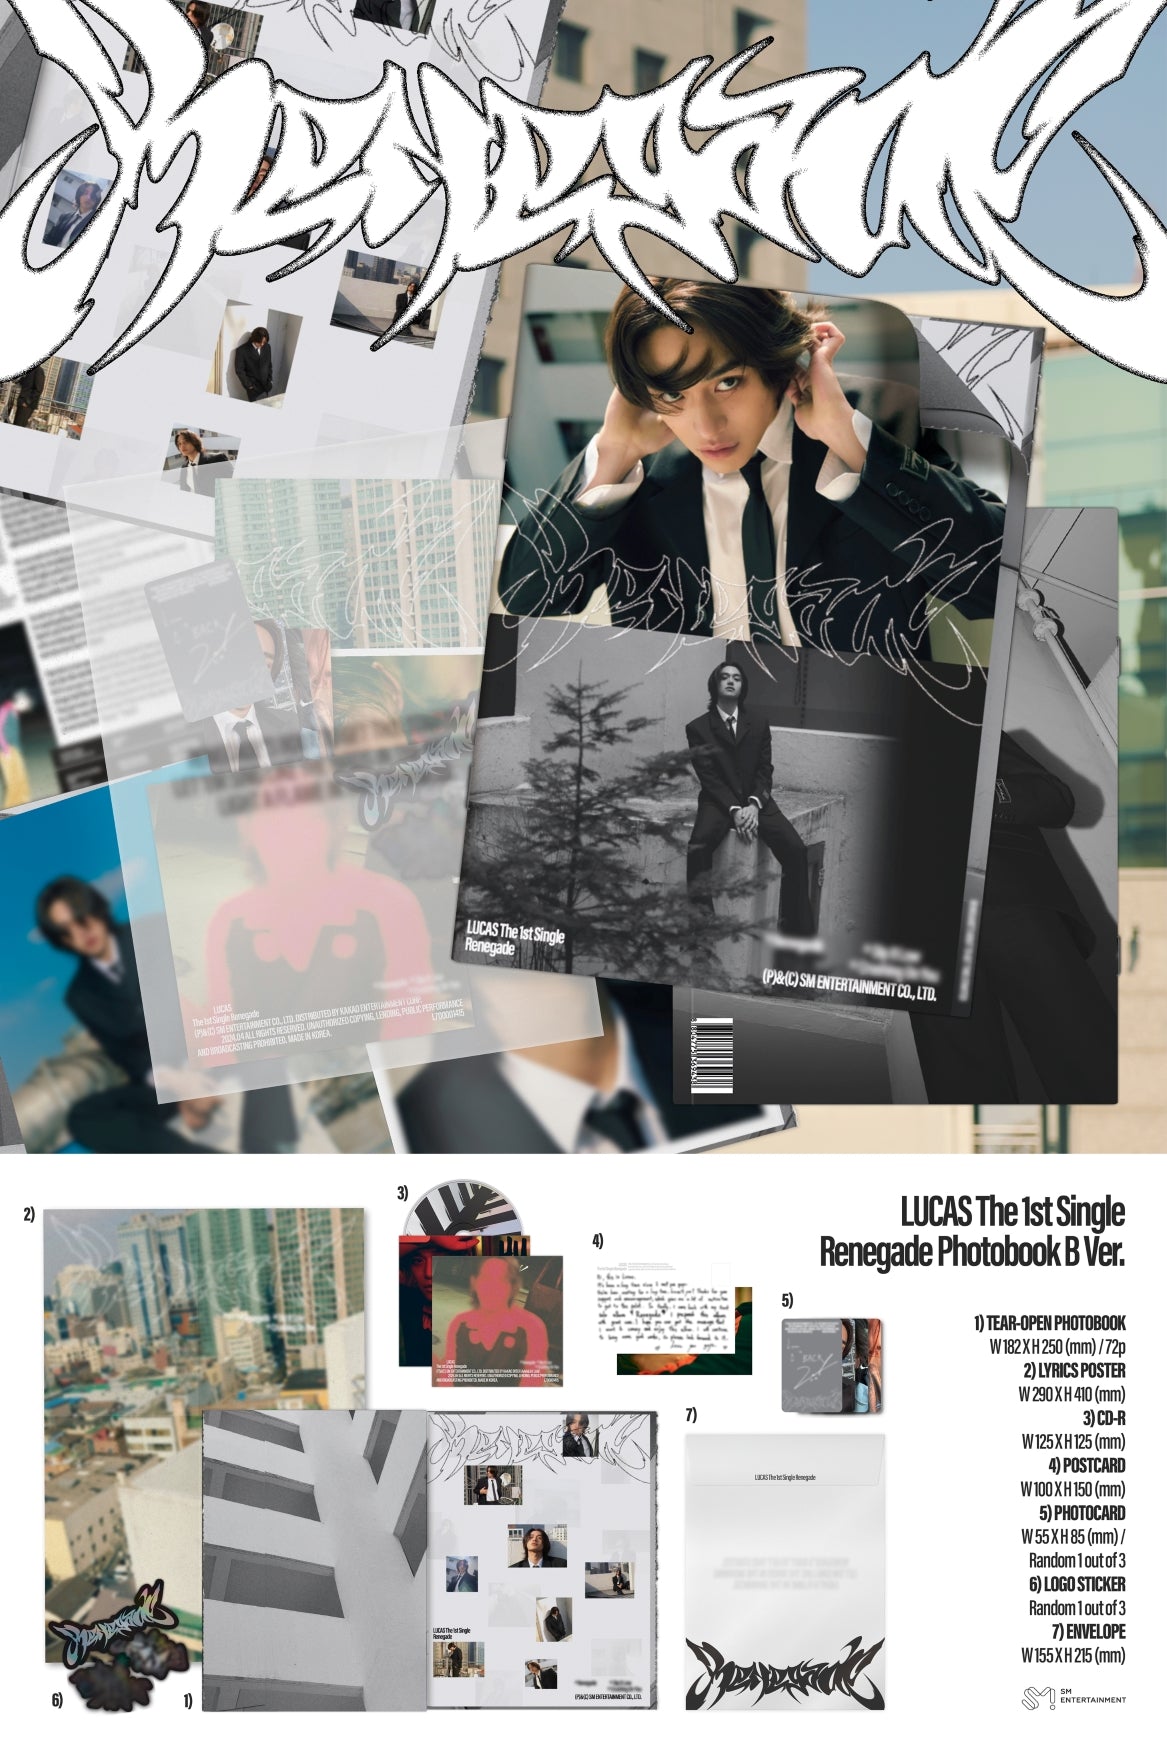 Lucas 1st Single Album Renegade - Photobook B Version Inclusions: Tear-open Photobook, CD, Lyrics Poster, Postcard, Photocard, Logo Sticker, Envelope